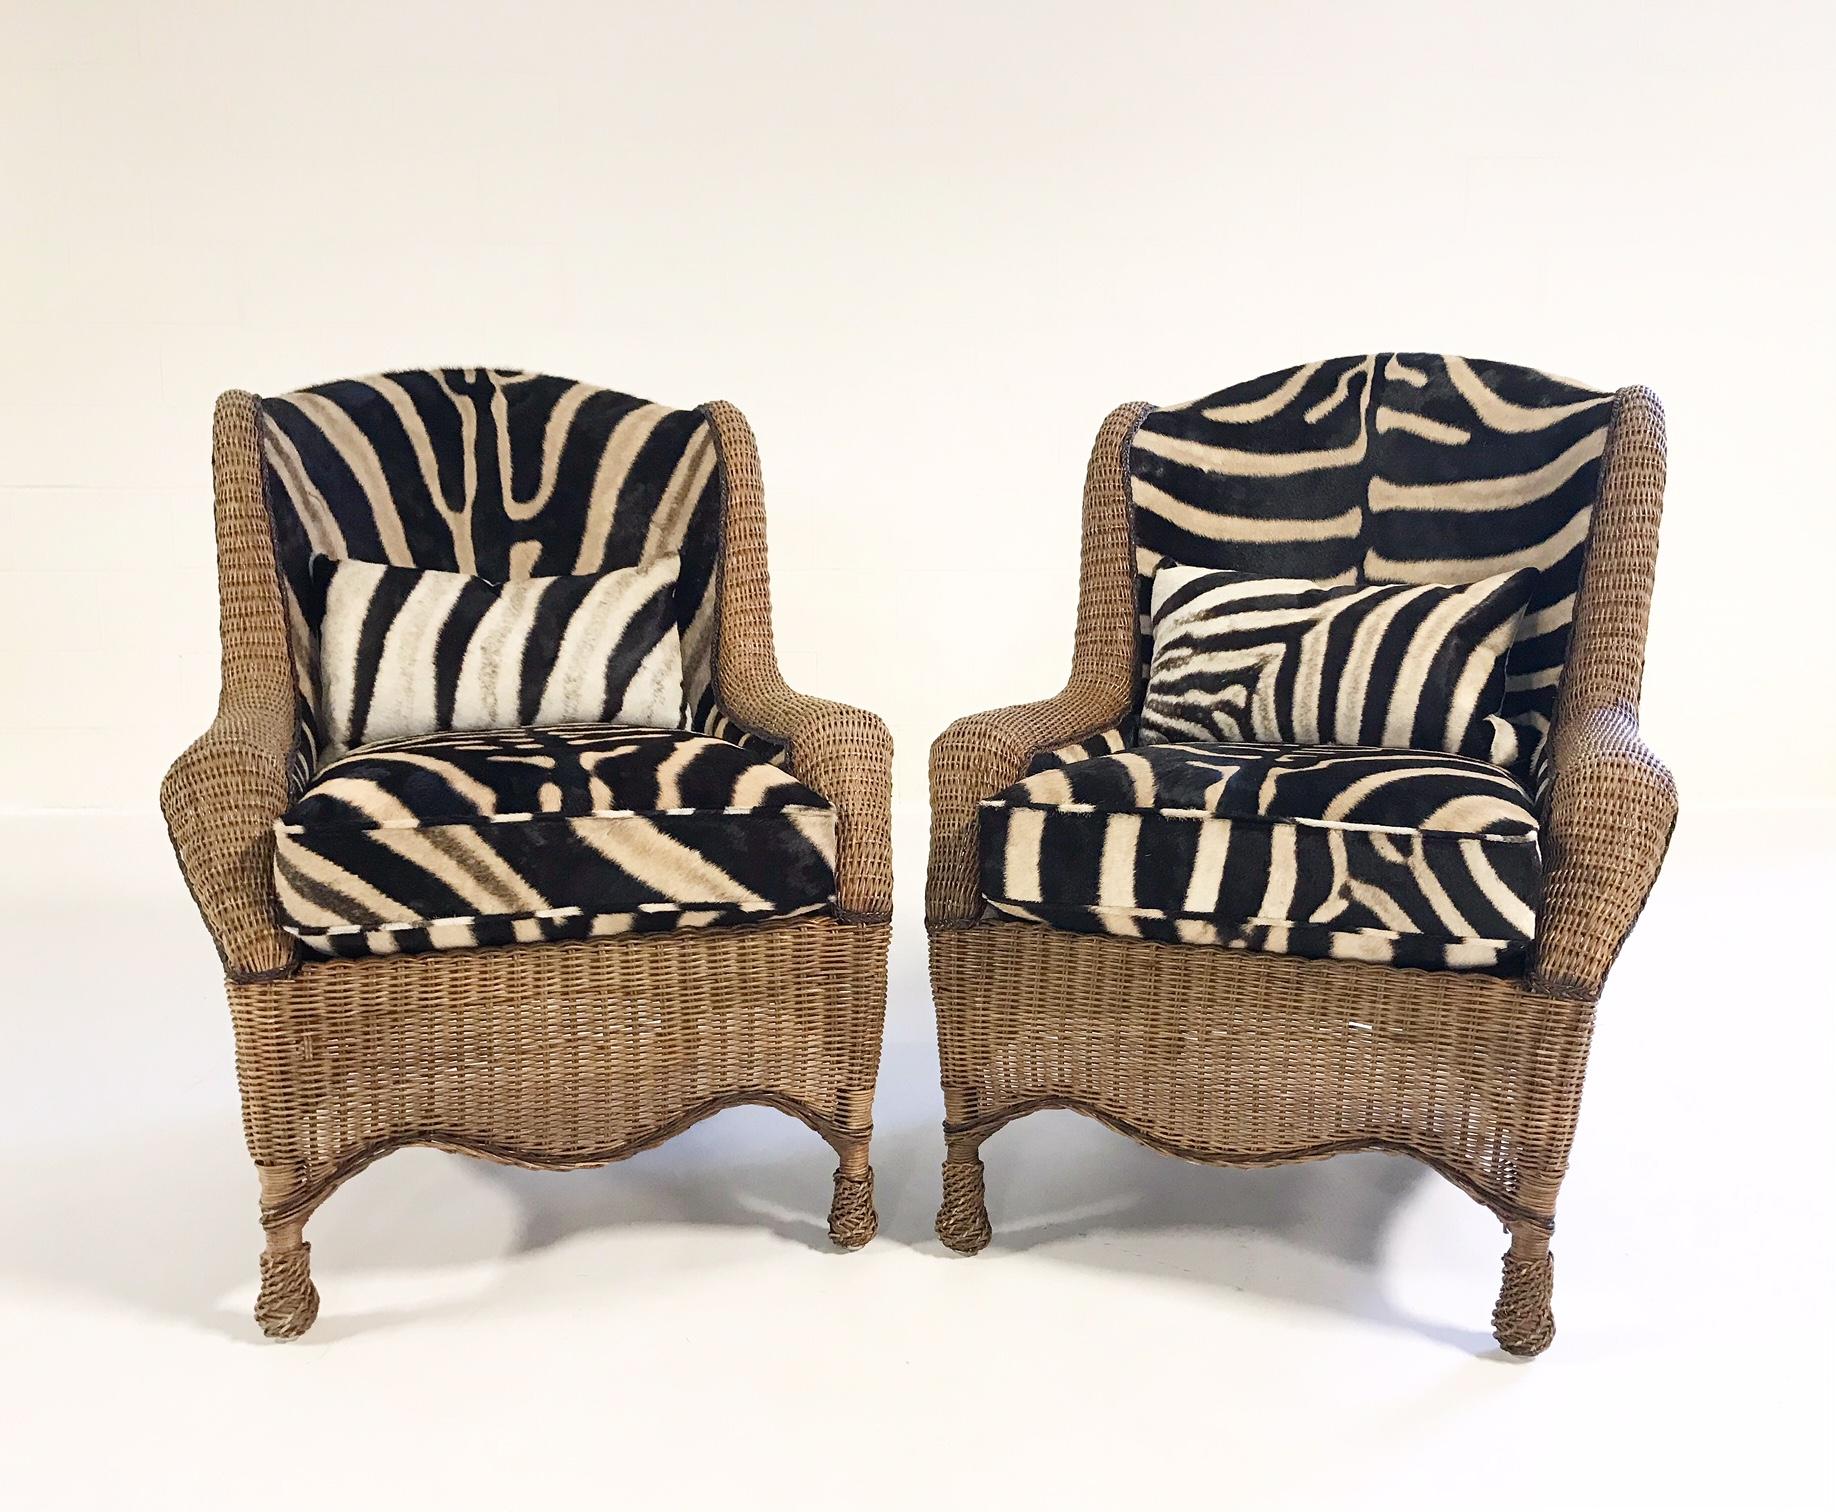 American Vintage Ralph Lauren Wicker Wingback Chairs Restored in Zebra Hide, Pair